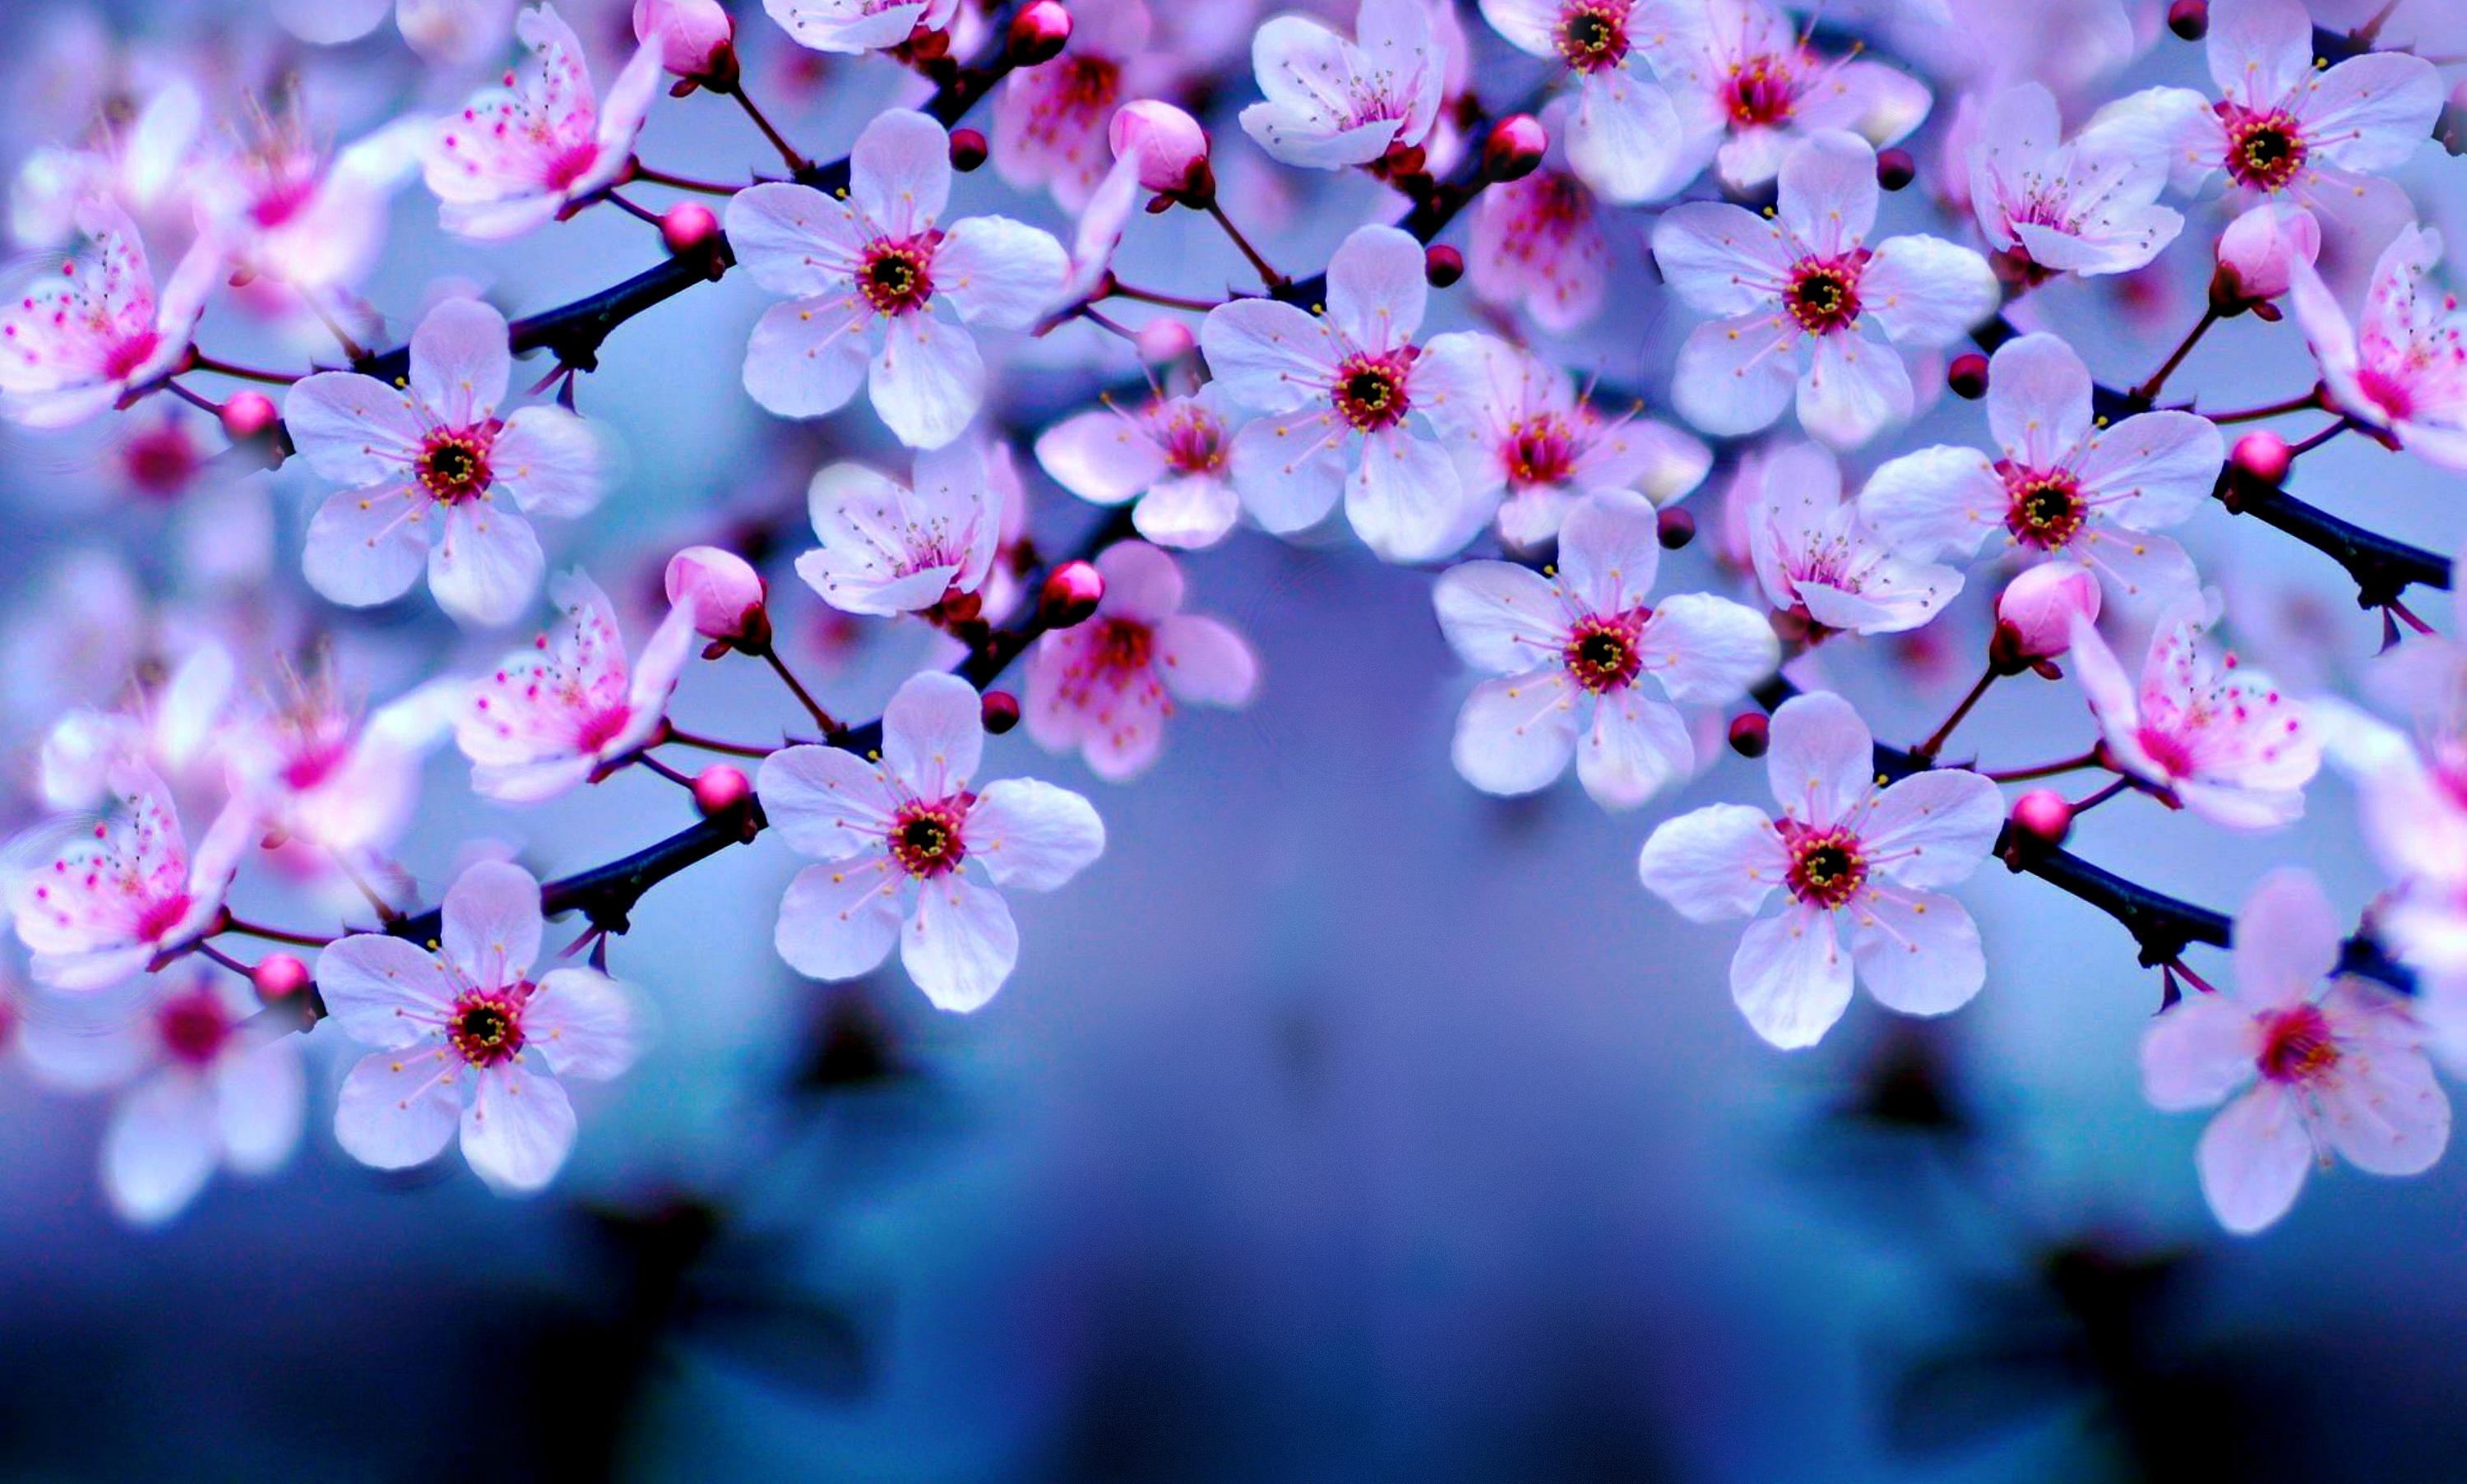 Cherry Blossom 4k, HD Flowers, 4k Wallpaper, Image, Background